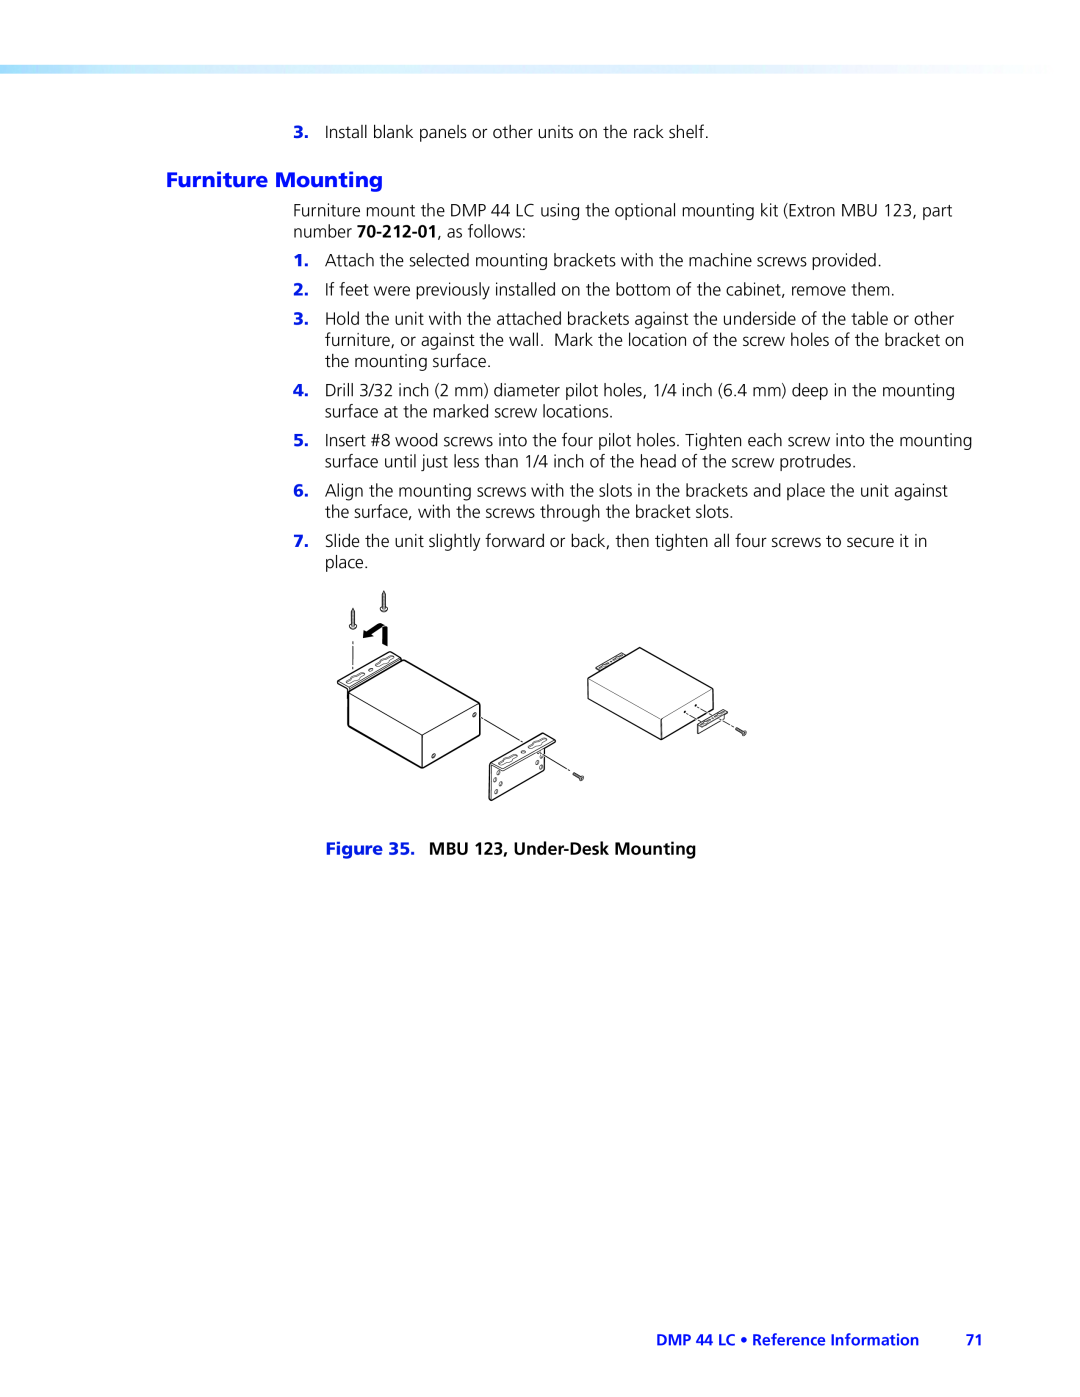 Extron electronic DMP 44 LC manual Furniture Mounting, MBU 123, Under-DeskMounting 